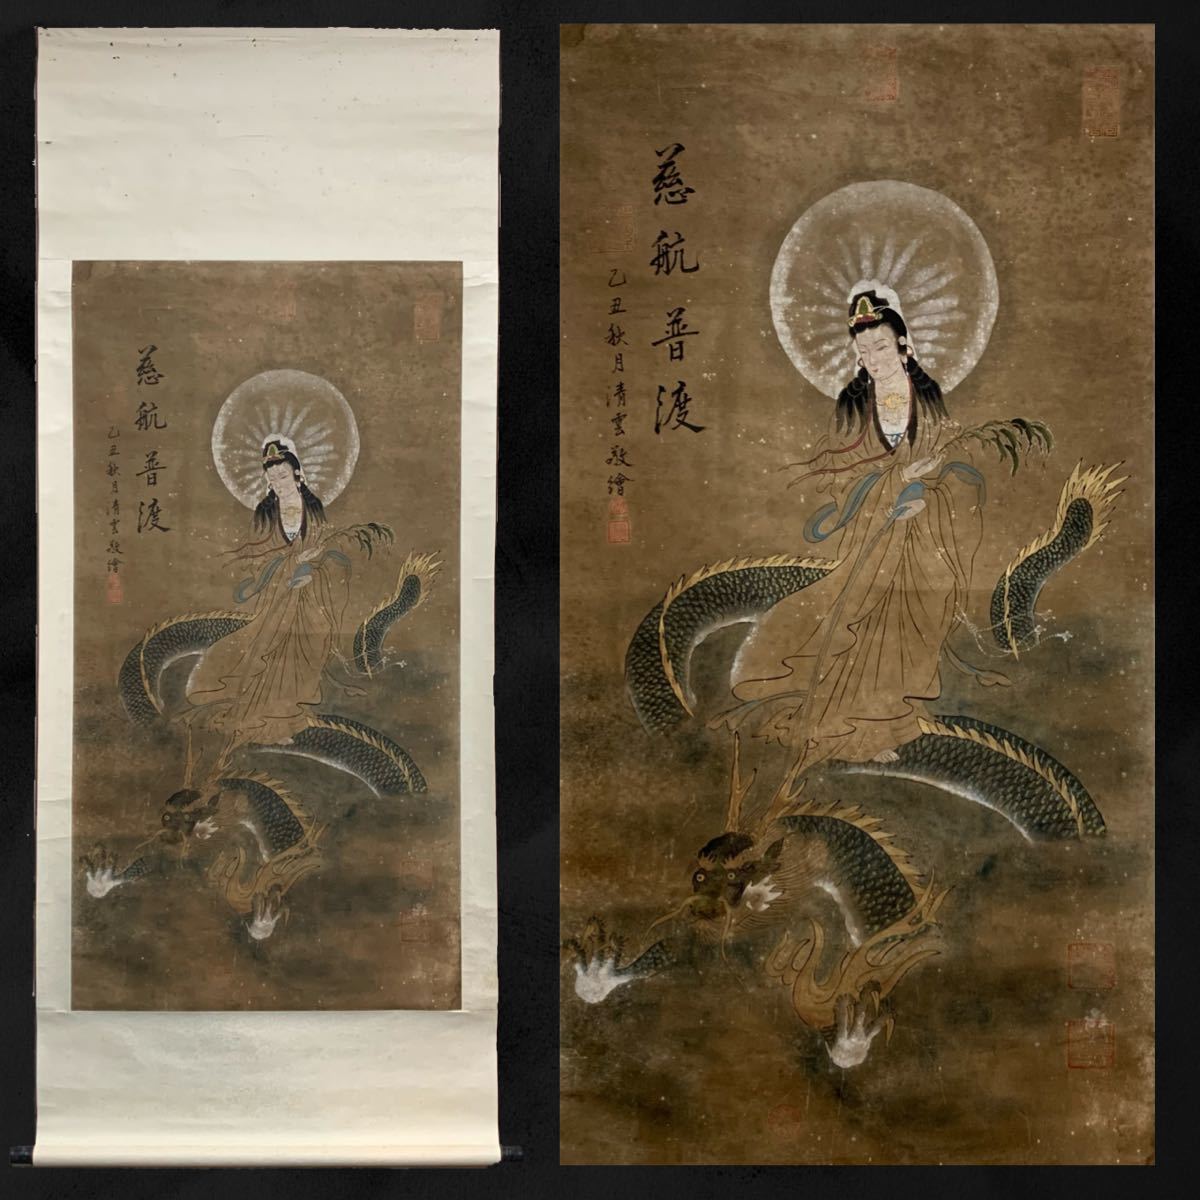 [Copie] (Rin 68) Seiun inscrit Kannon Bodhisattva sur le dragon suspendu rouleau peinture bouddhiste art bouddhiste environ 193 x 80 cm, peinture, Peinture japonaise, personne, Bodhisattva